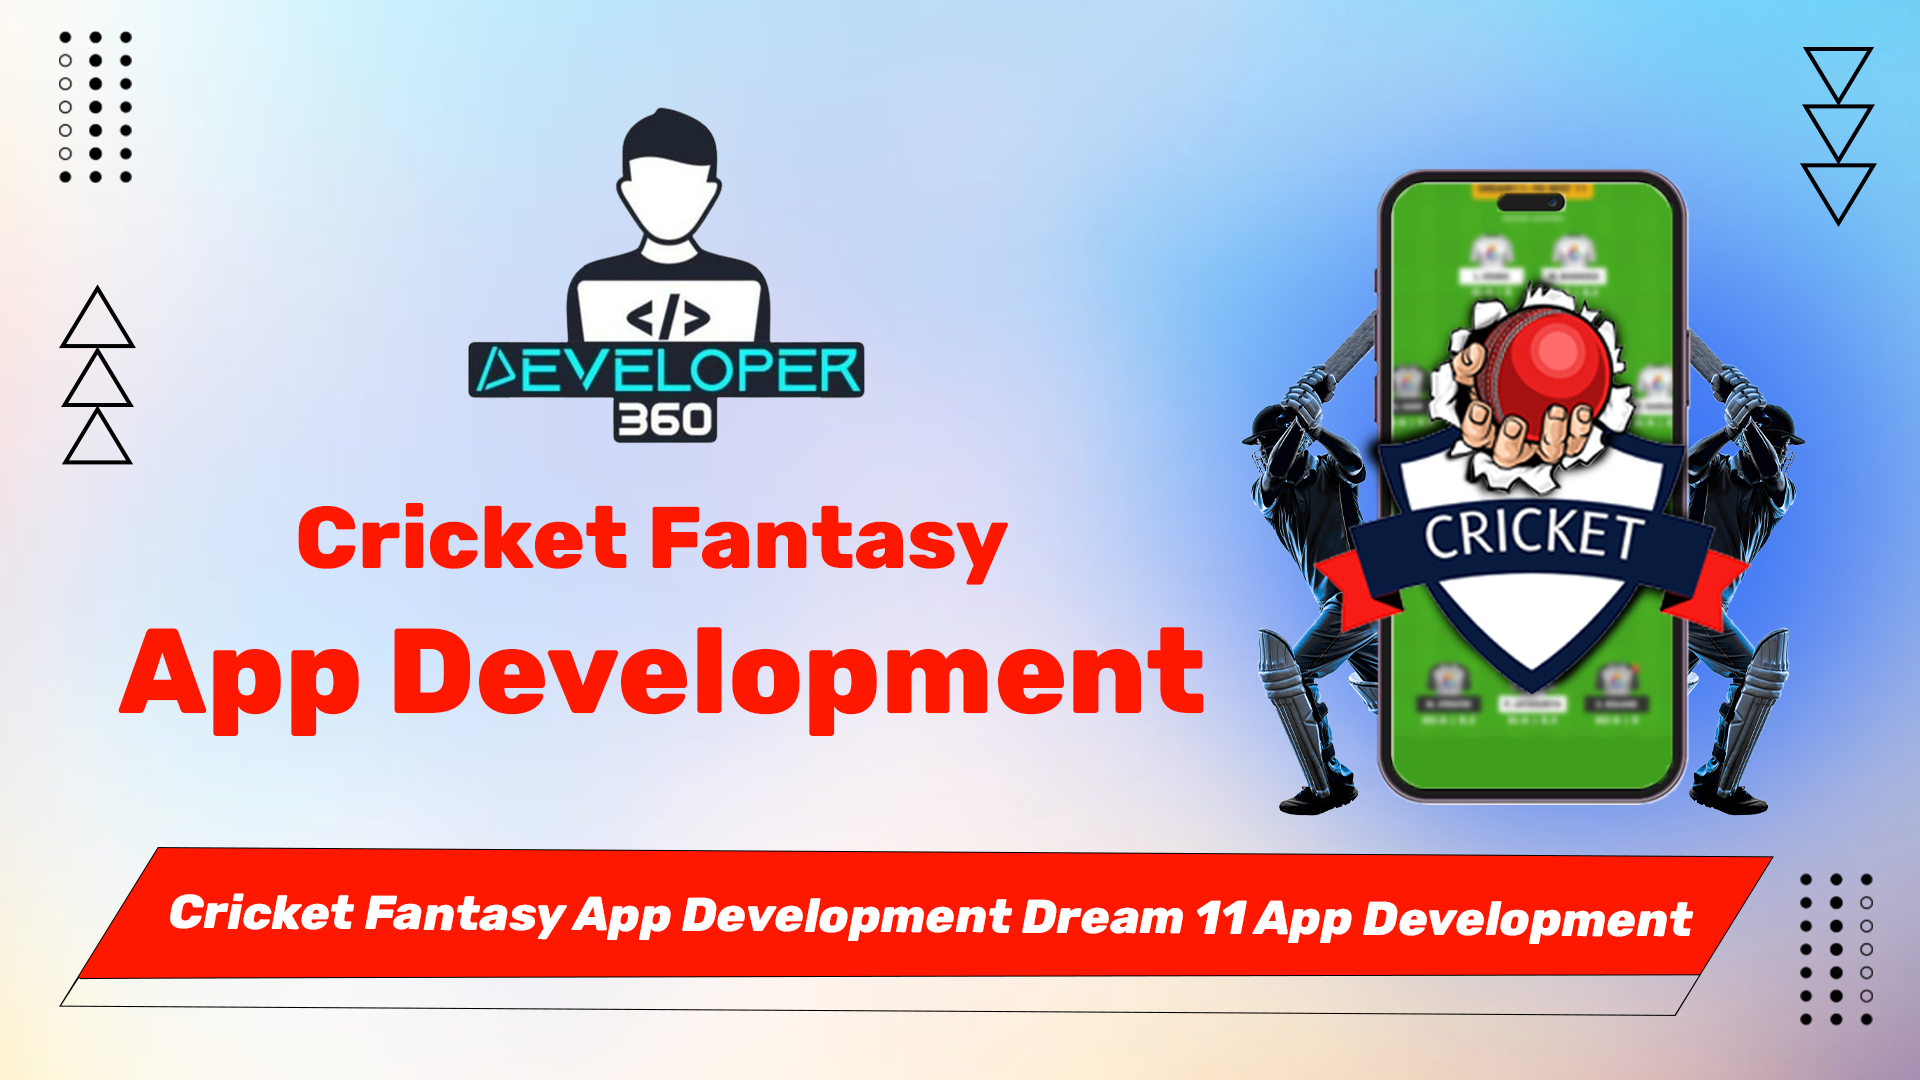 Cricket Fantasy App Development Create Your Own Dream 11 Like App